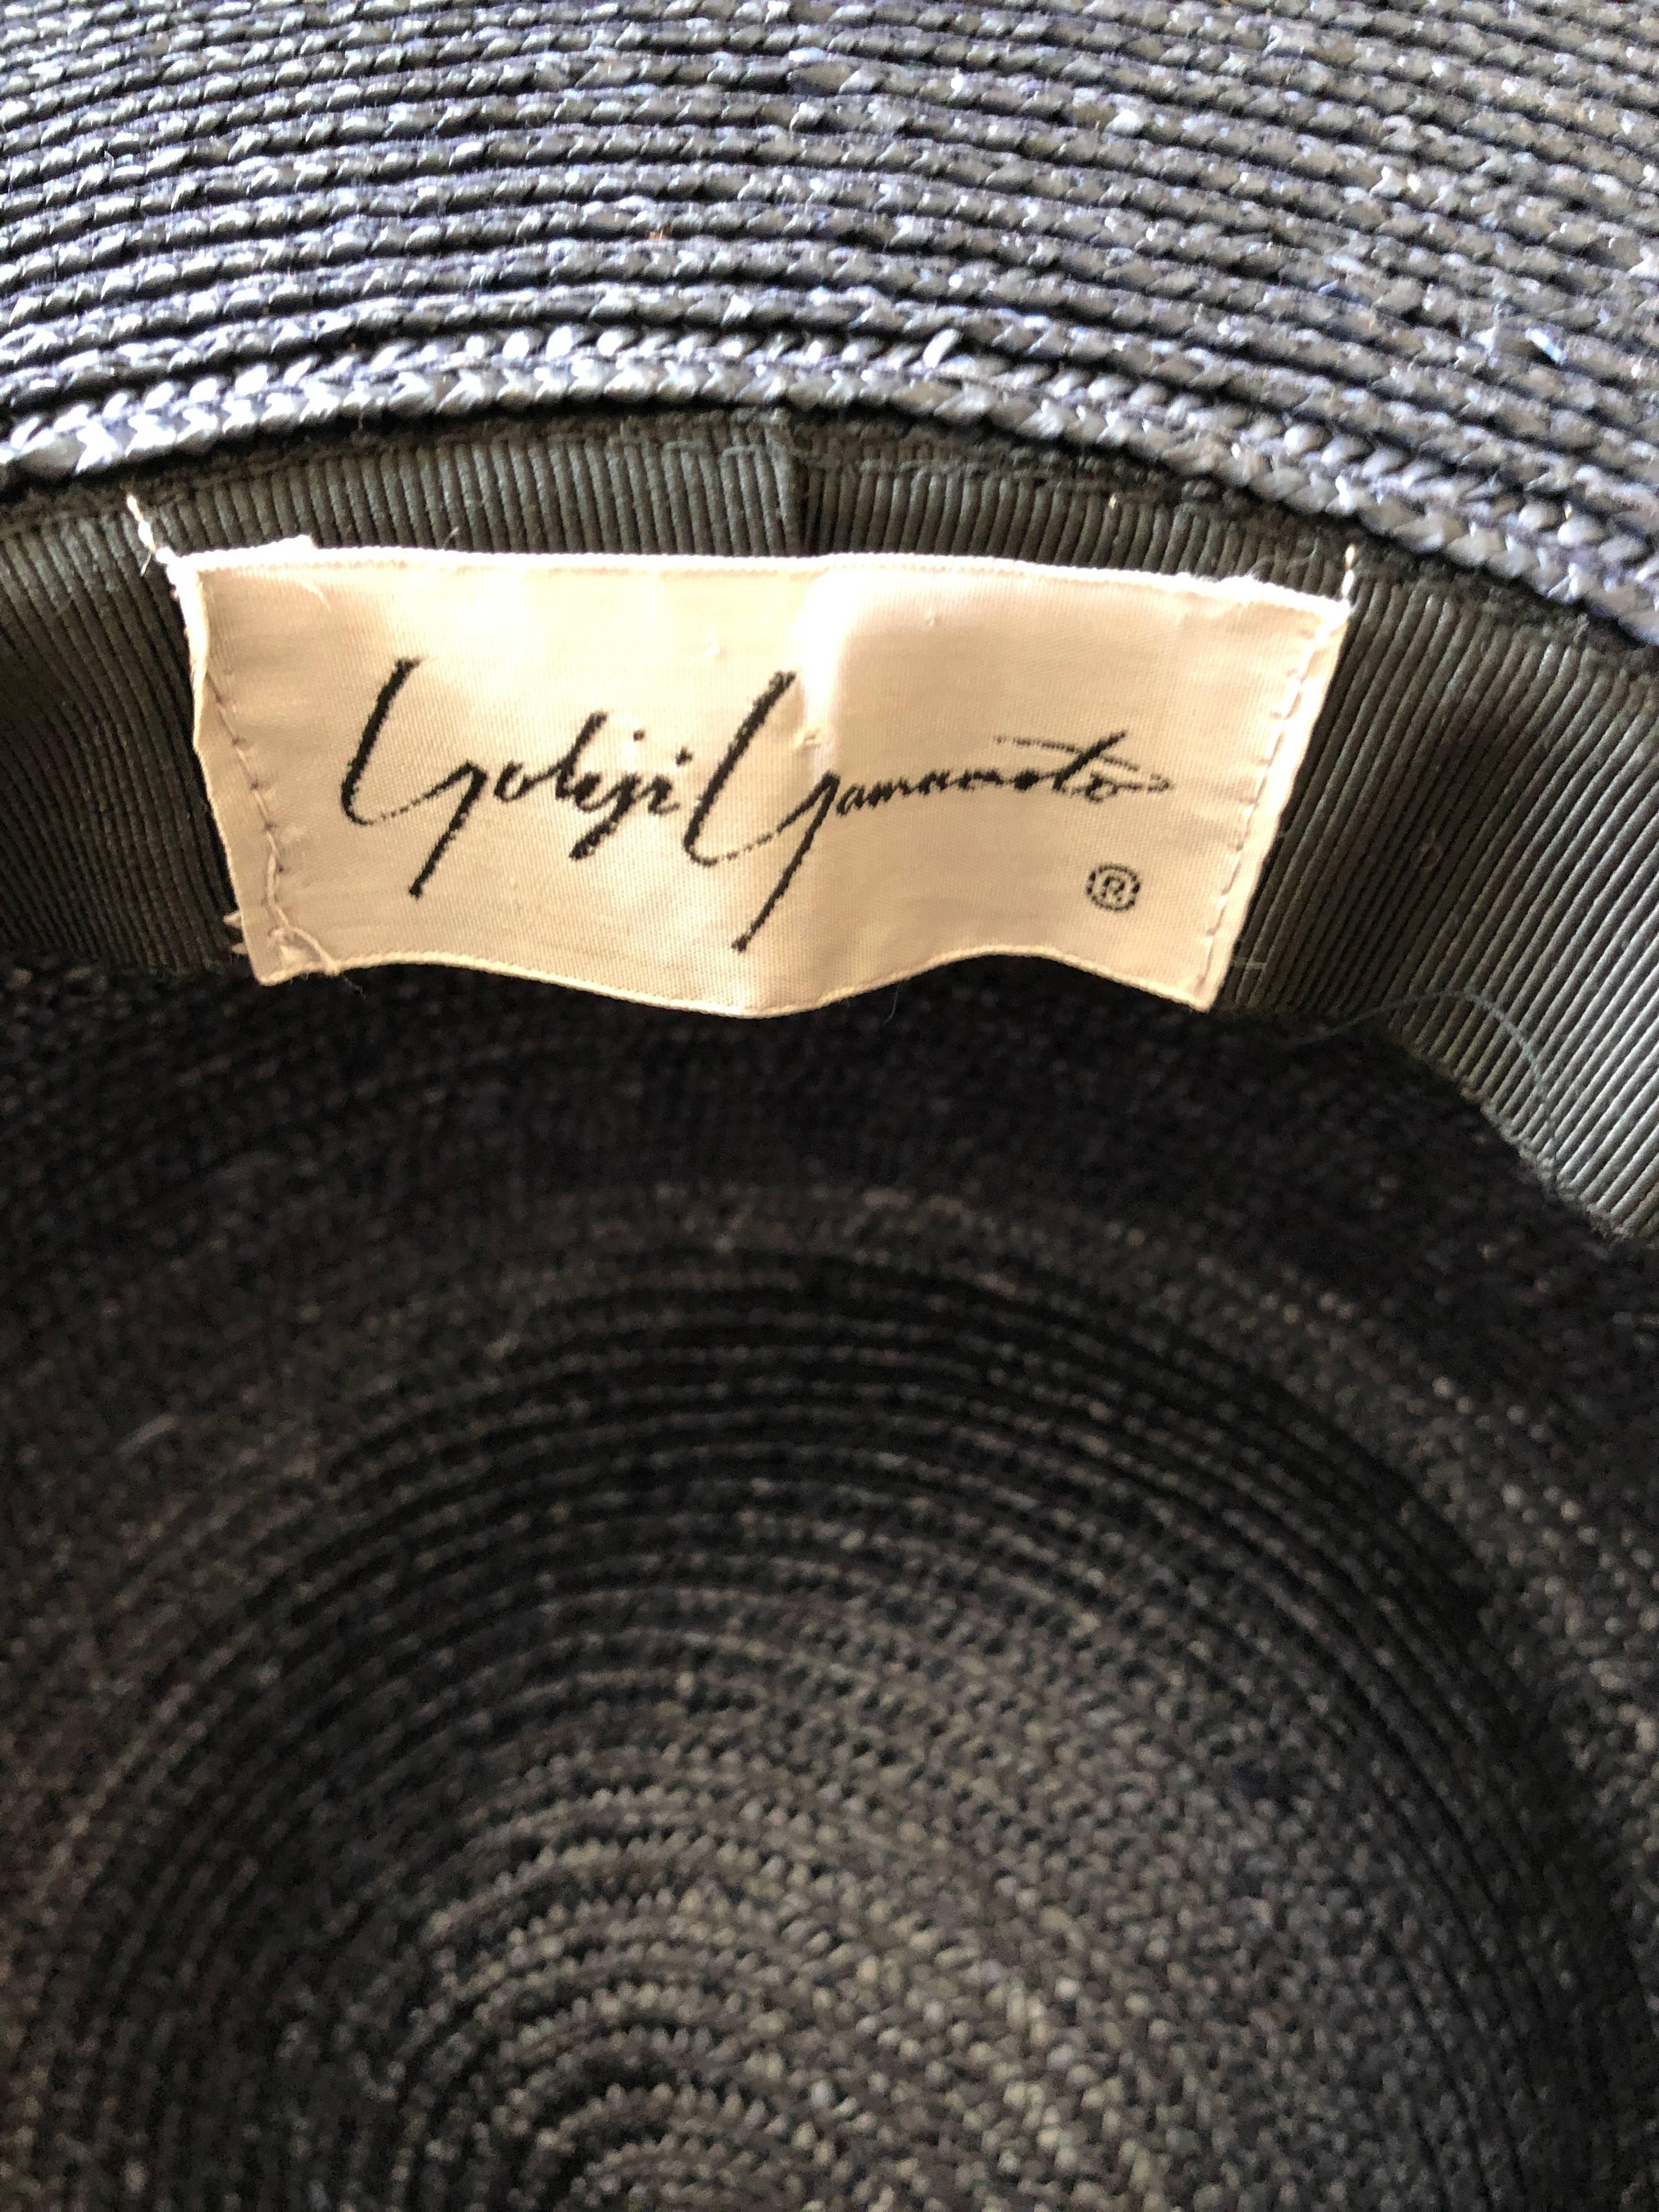 Yohji Yamamoto Vintage Wide Brim Straw Portrait Hat In Excellent Condition For Sale In Cloverdale, CA